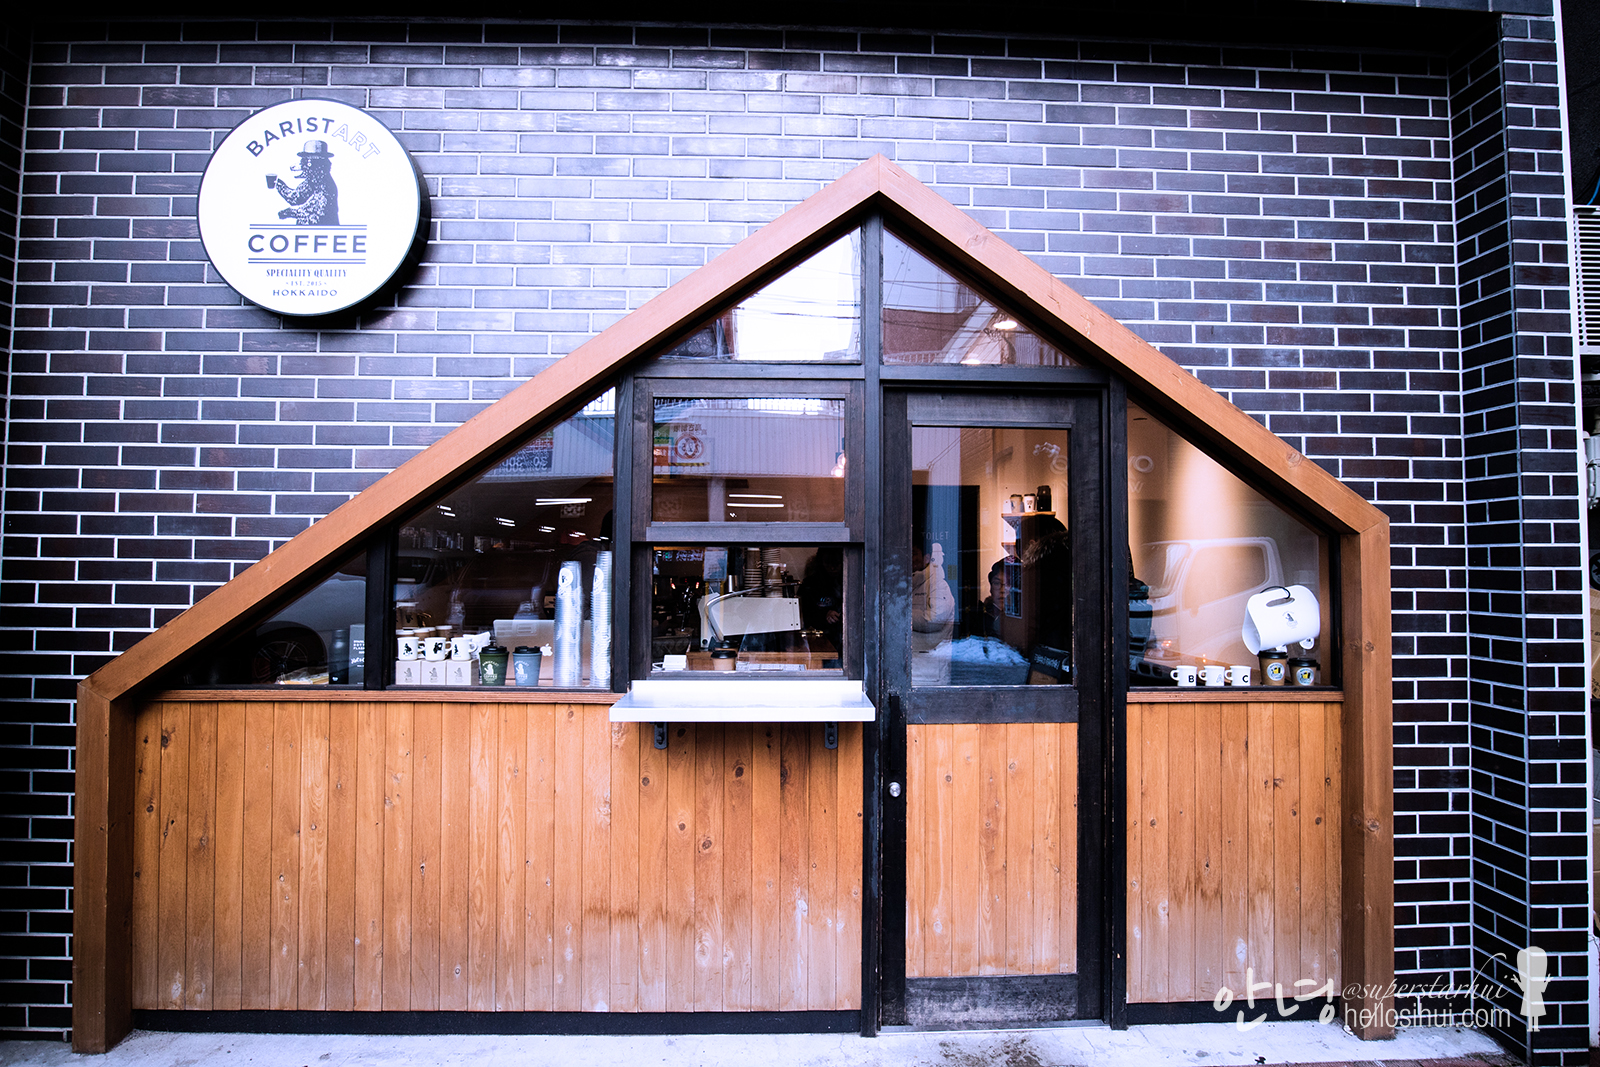 Winter Hokkaido 2017 Day 2: Nijo Market x Baristart Coffee x Red Brick Office